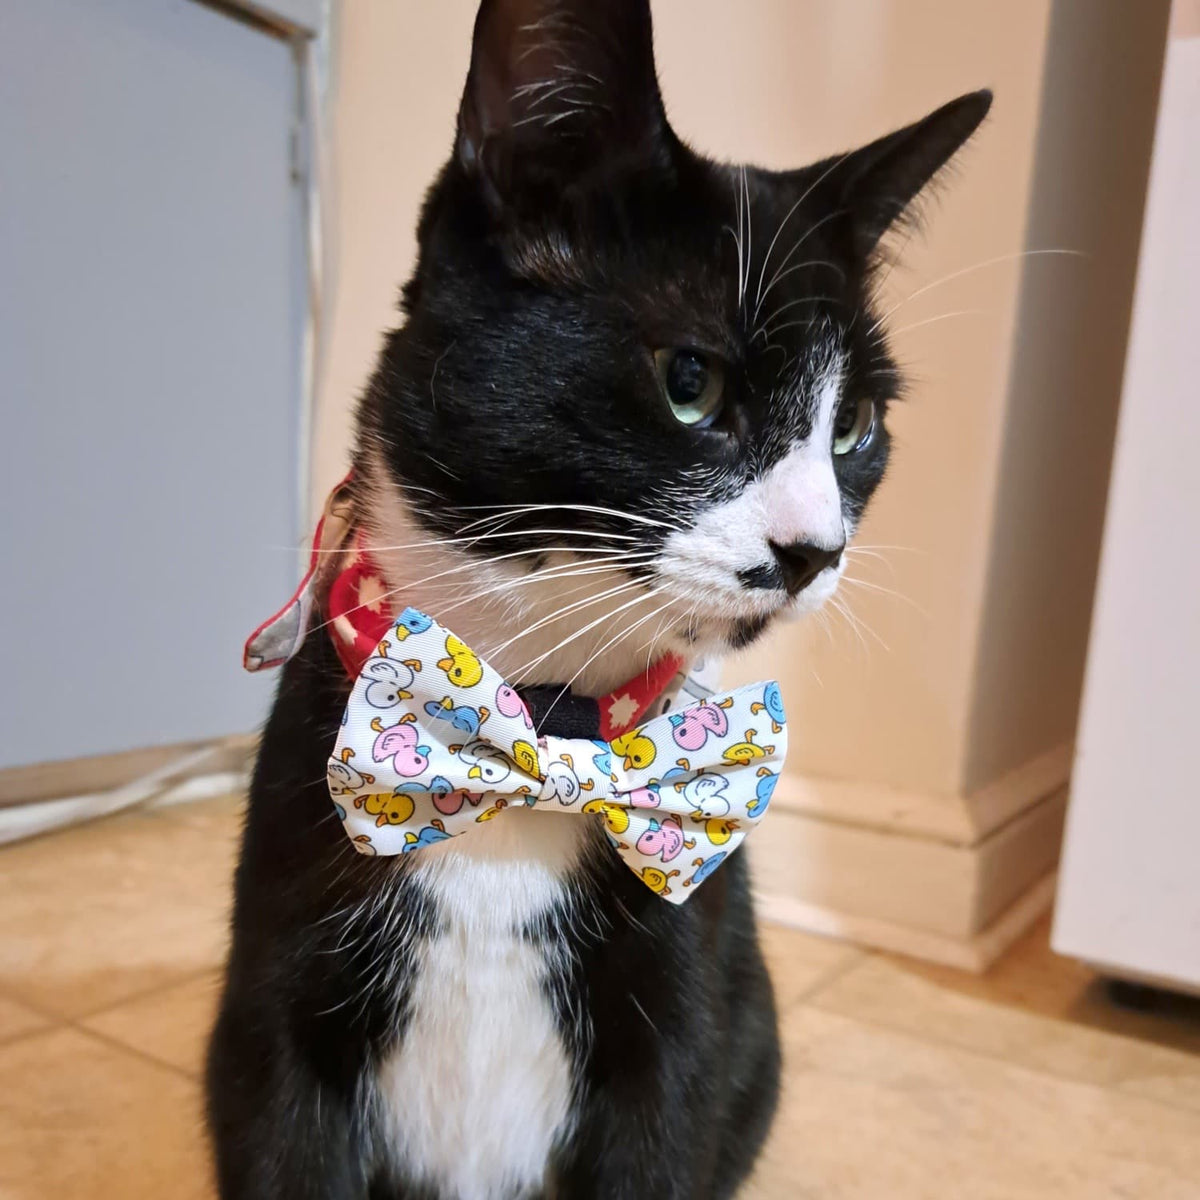 Cute Cat Kitten Wearing Bow Tie Collar With Duck Pattern Design